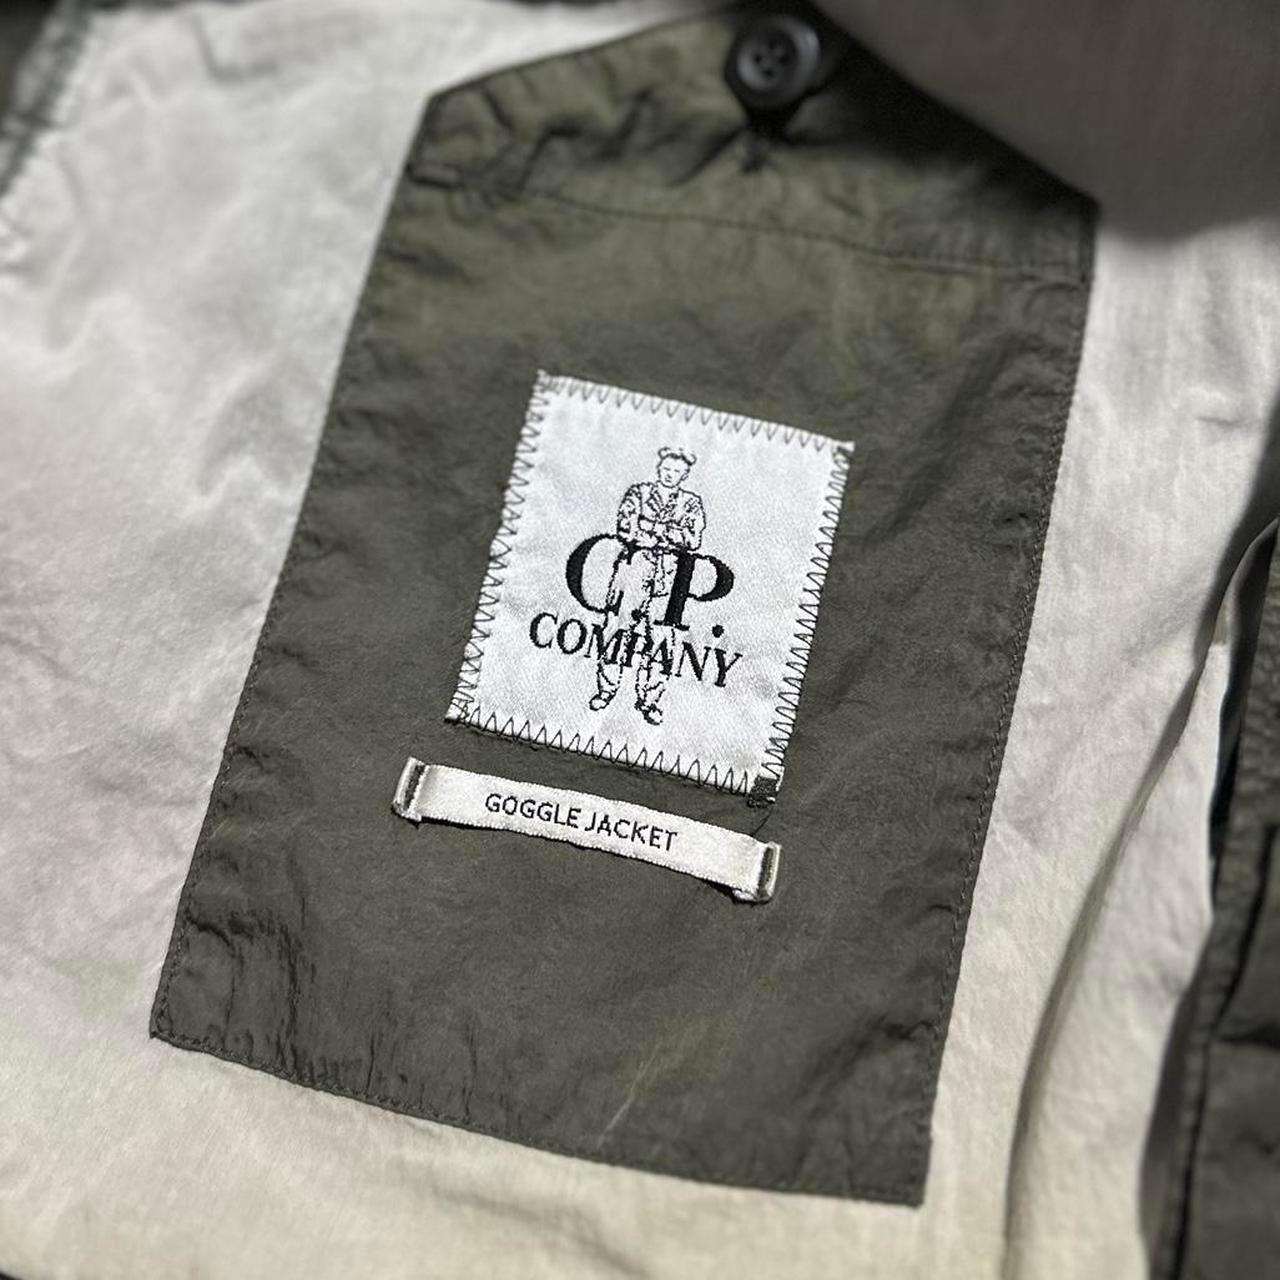 CP Company Green Chrome Nylon Goggle Jacket - Known Source